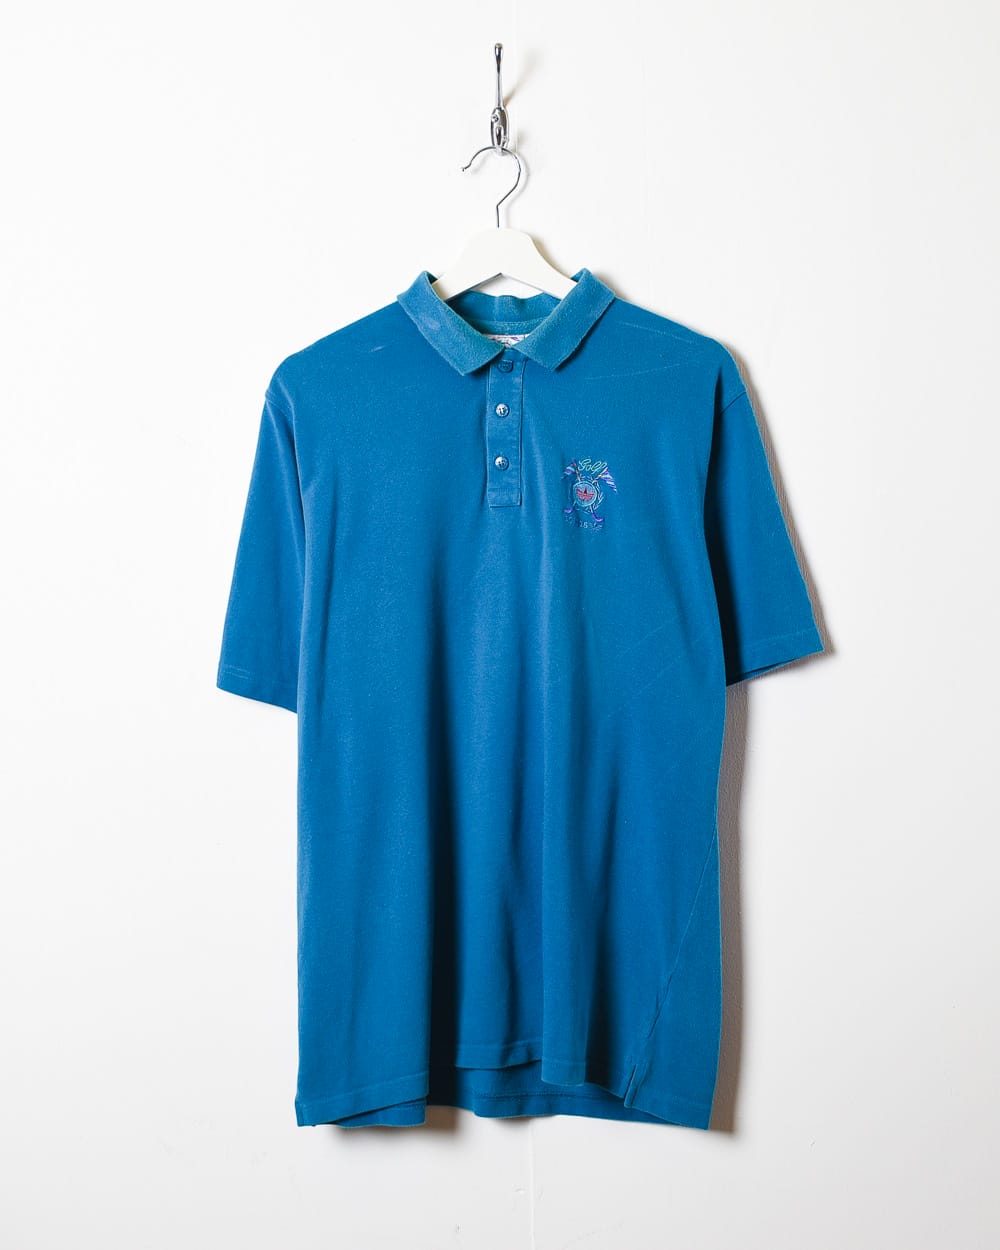 Blue Adidas Golf Polo Shirt - Large